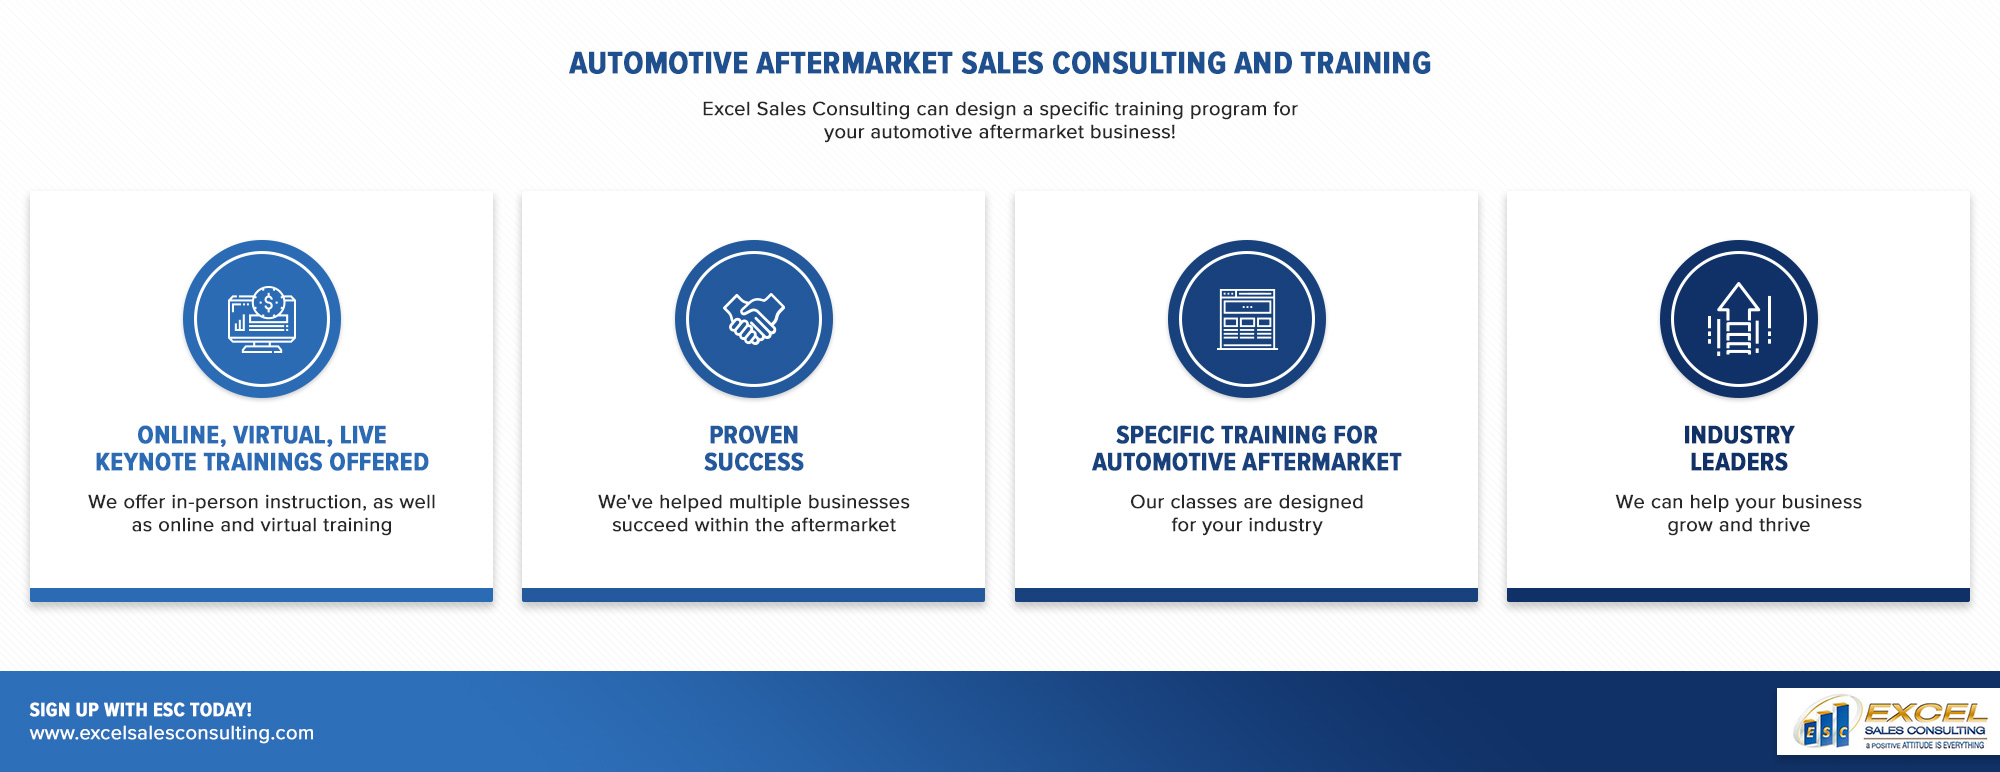 Automotive Aftermarket Sales - Infographic1